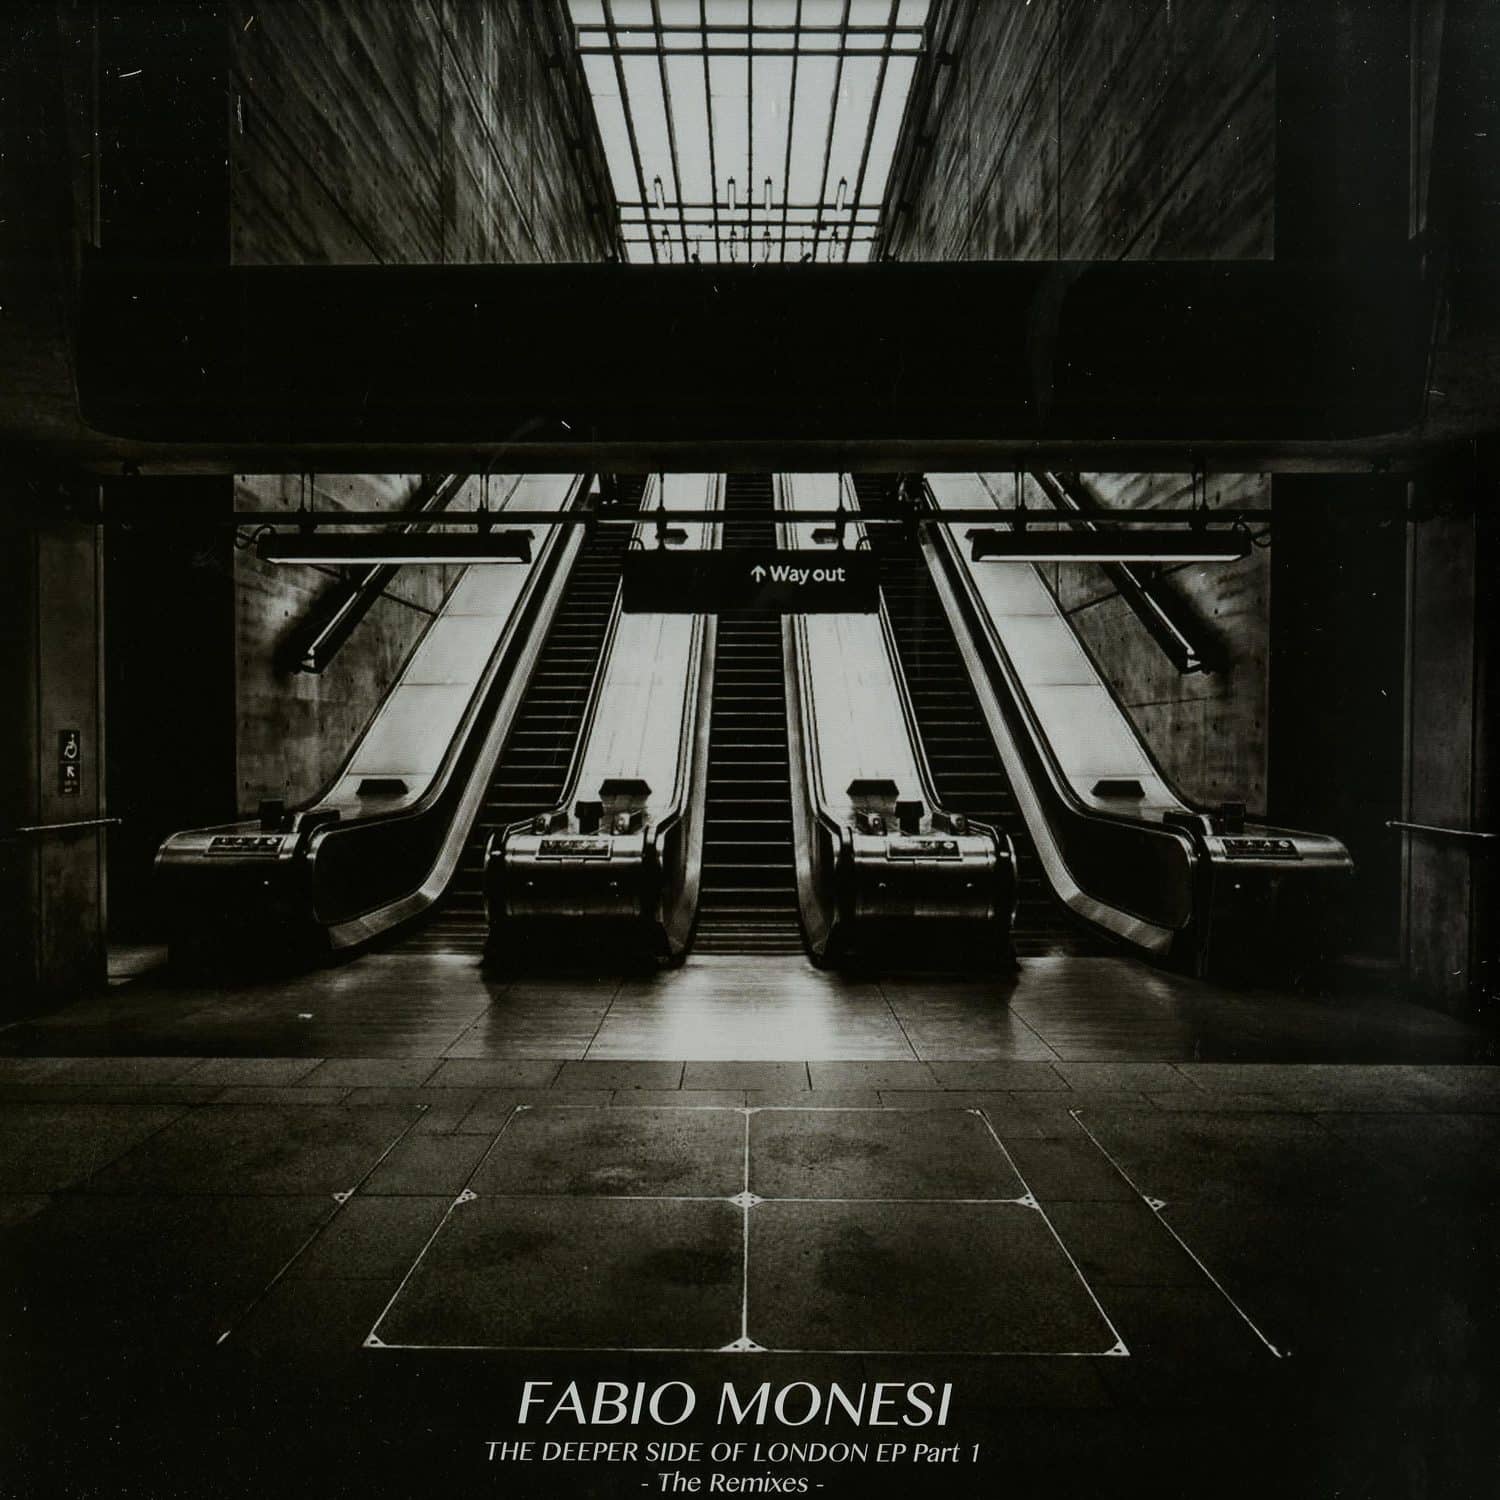 Fabio Monesi - THE DEEPER SIDE OF LONDON EP PART 1: THE REMIXES 